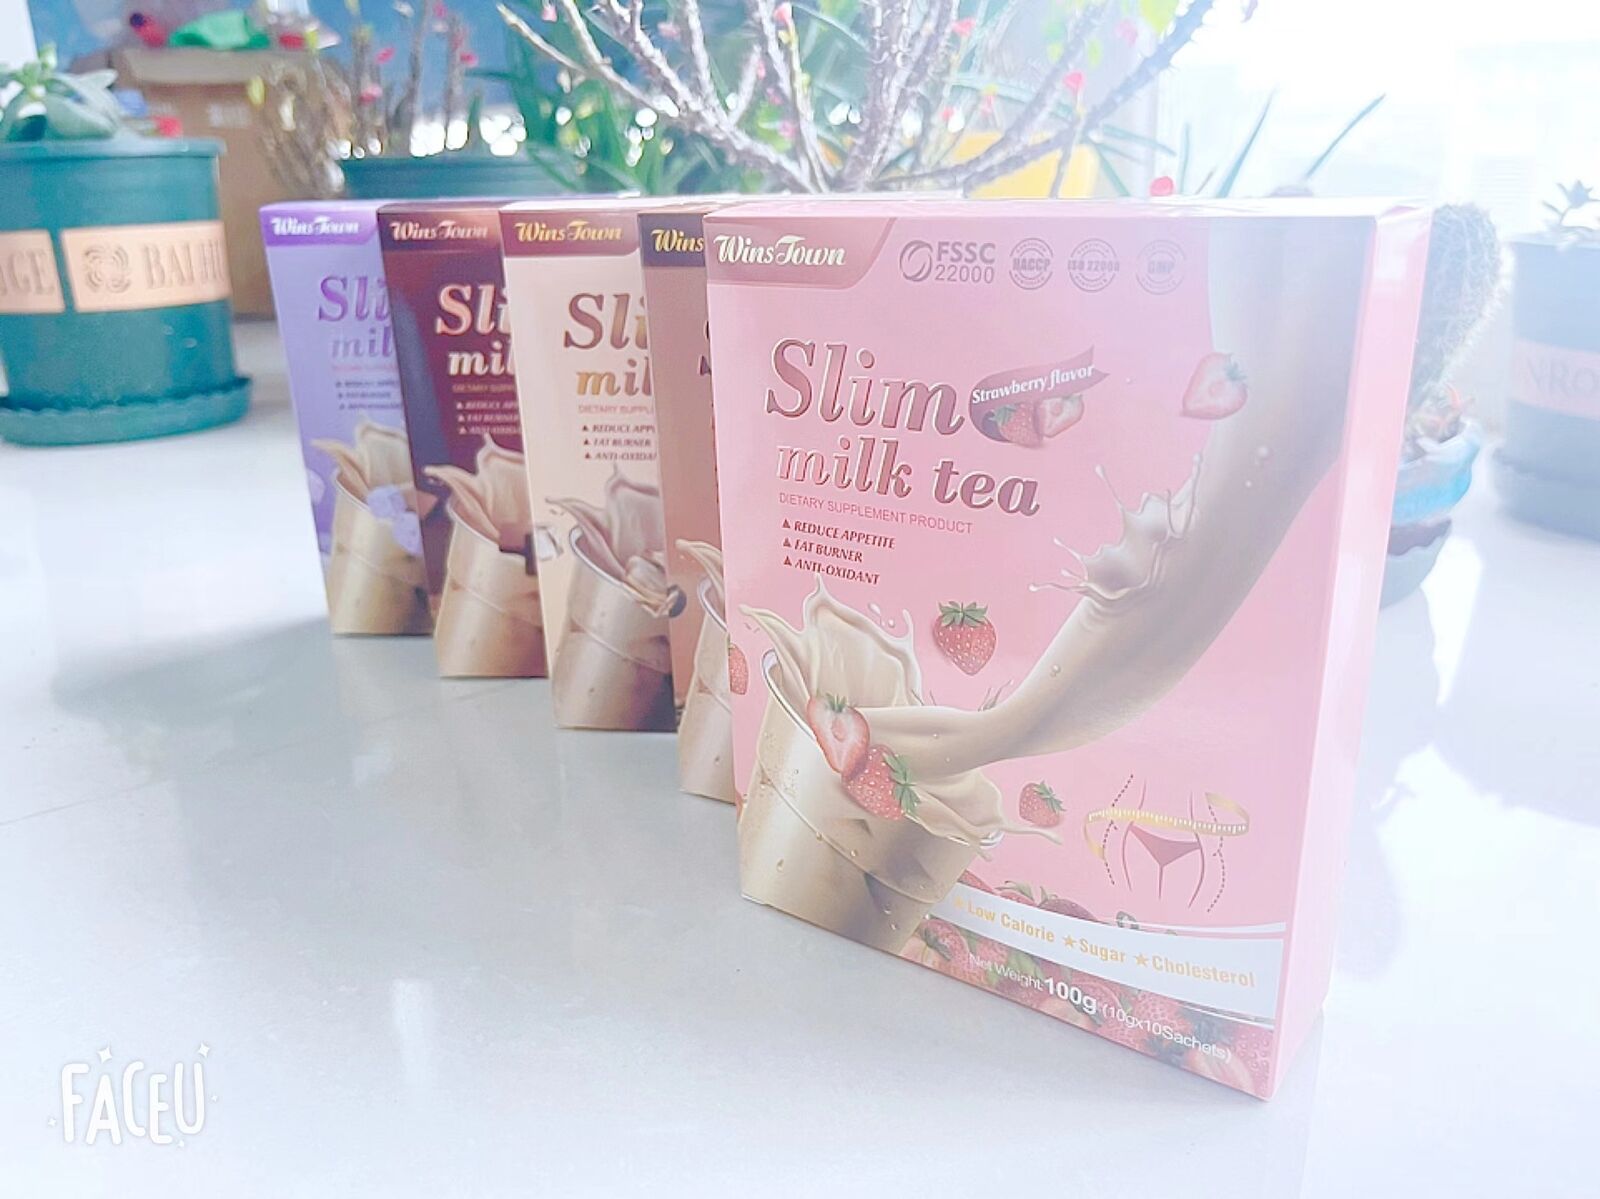 Slim Milk Tea Taro Flavor Powder Sliming Weight Loss Fat Burner Tea 100g/3.52oz